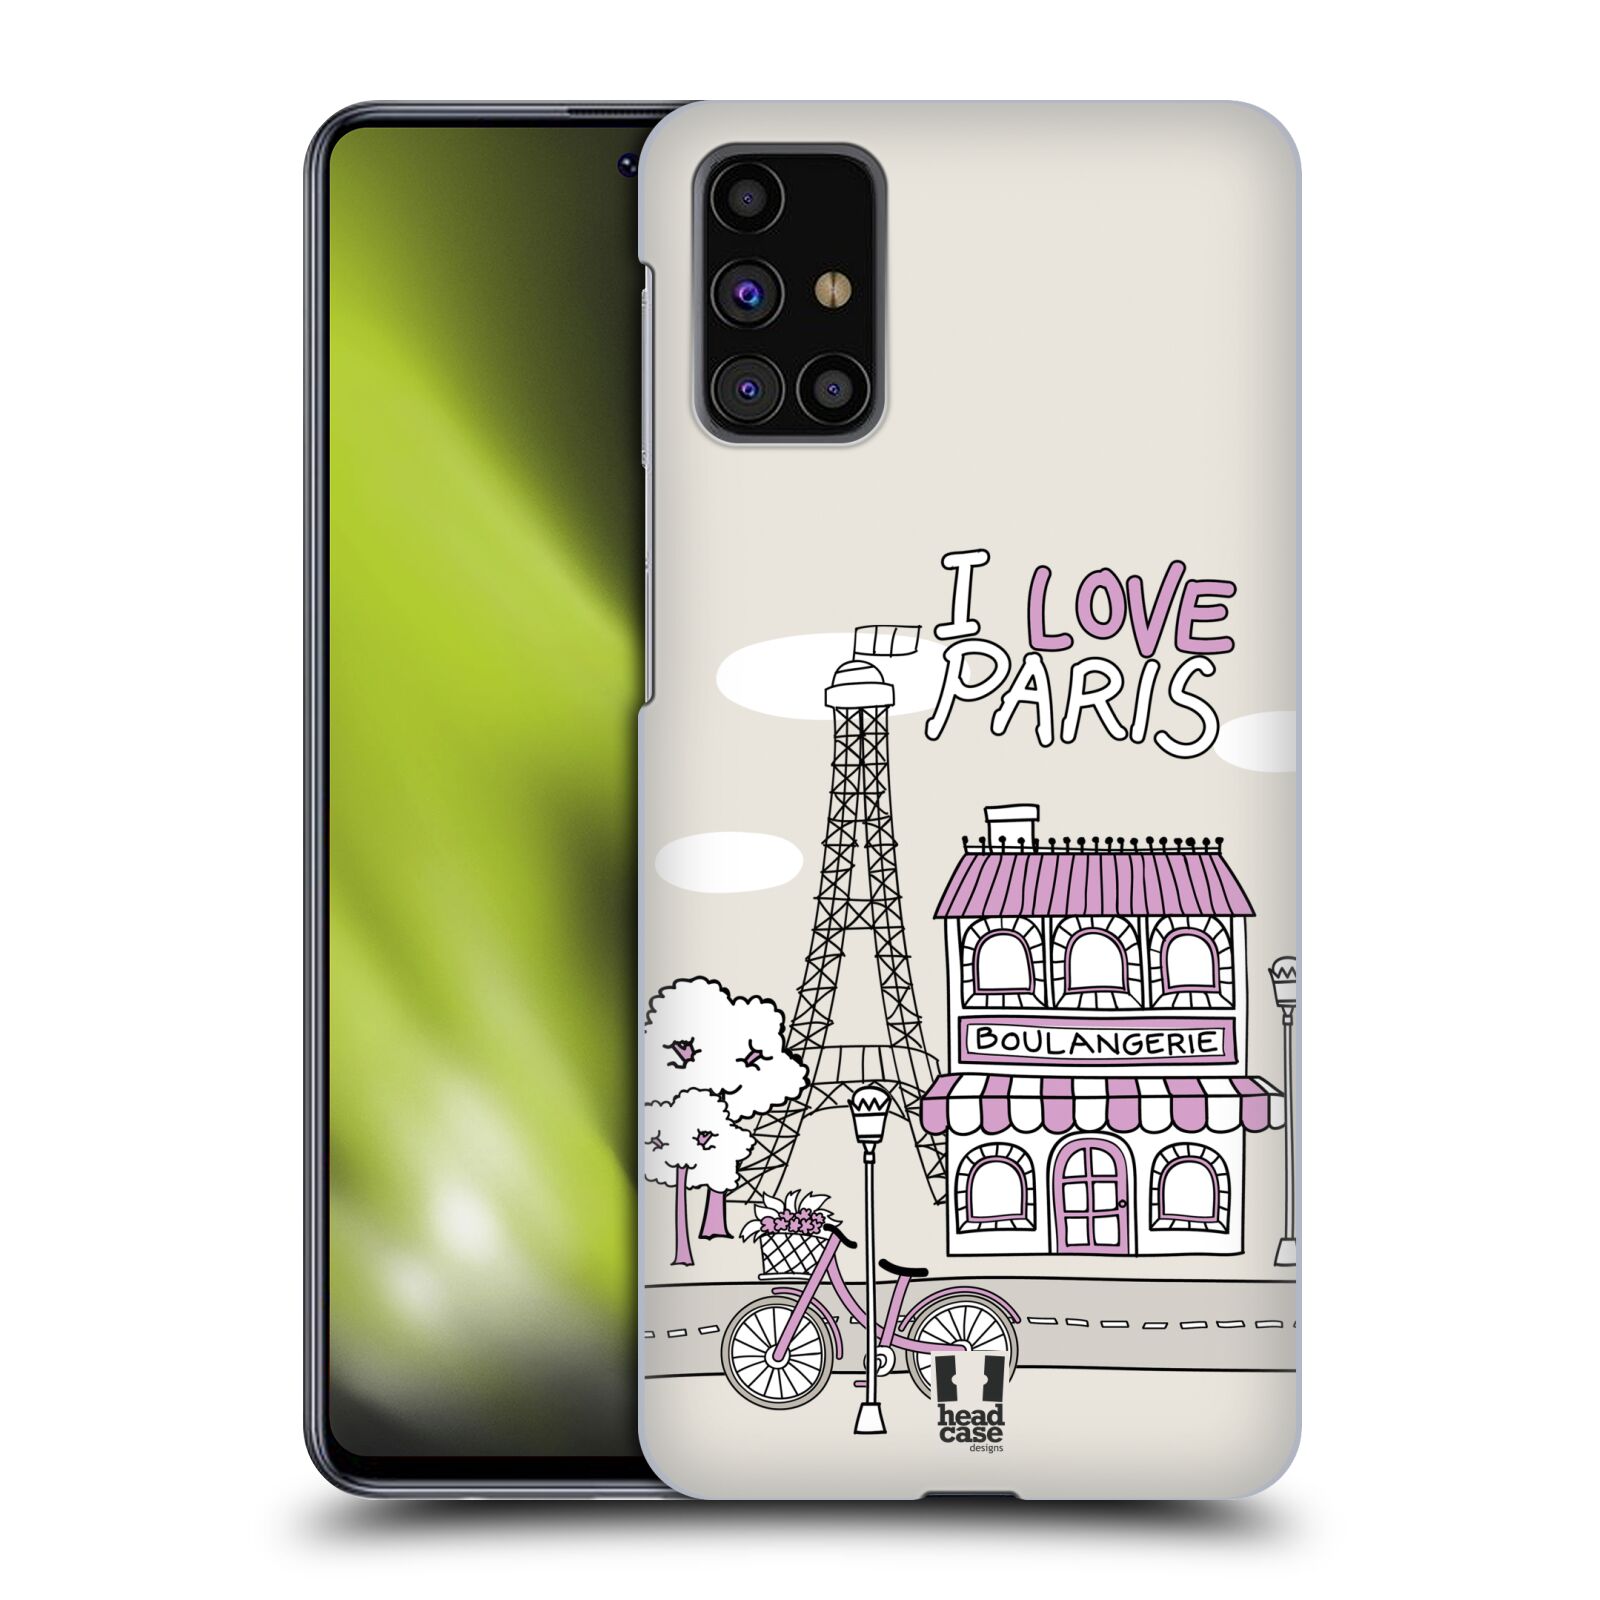 Plastový obal HEAD CASE na mobil Samsung Galaxy M31s vzor Kreslená městečka FIALOVÁ, Paříž, Francie, I LOVE PARIS